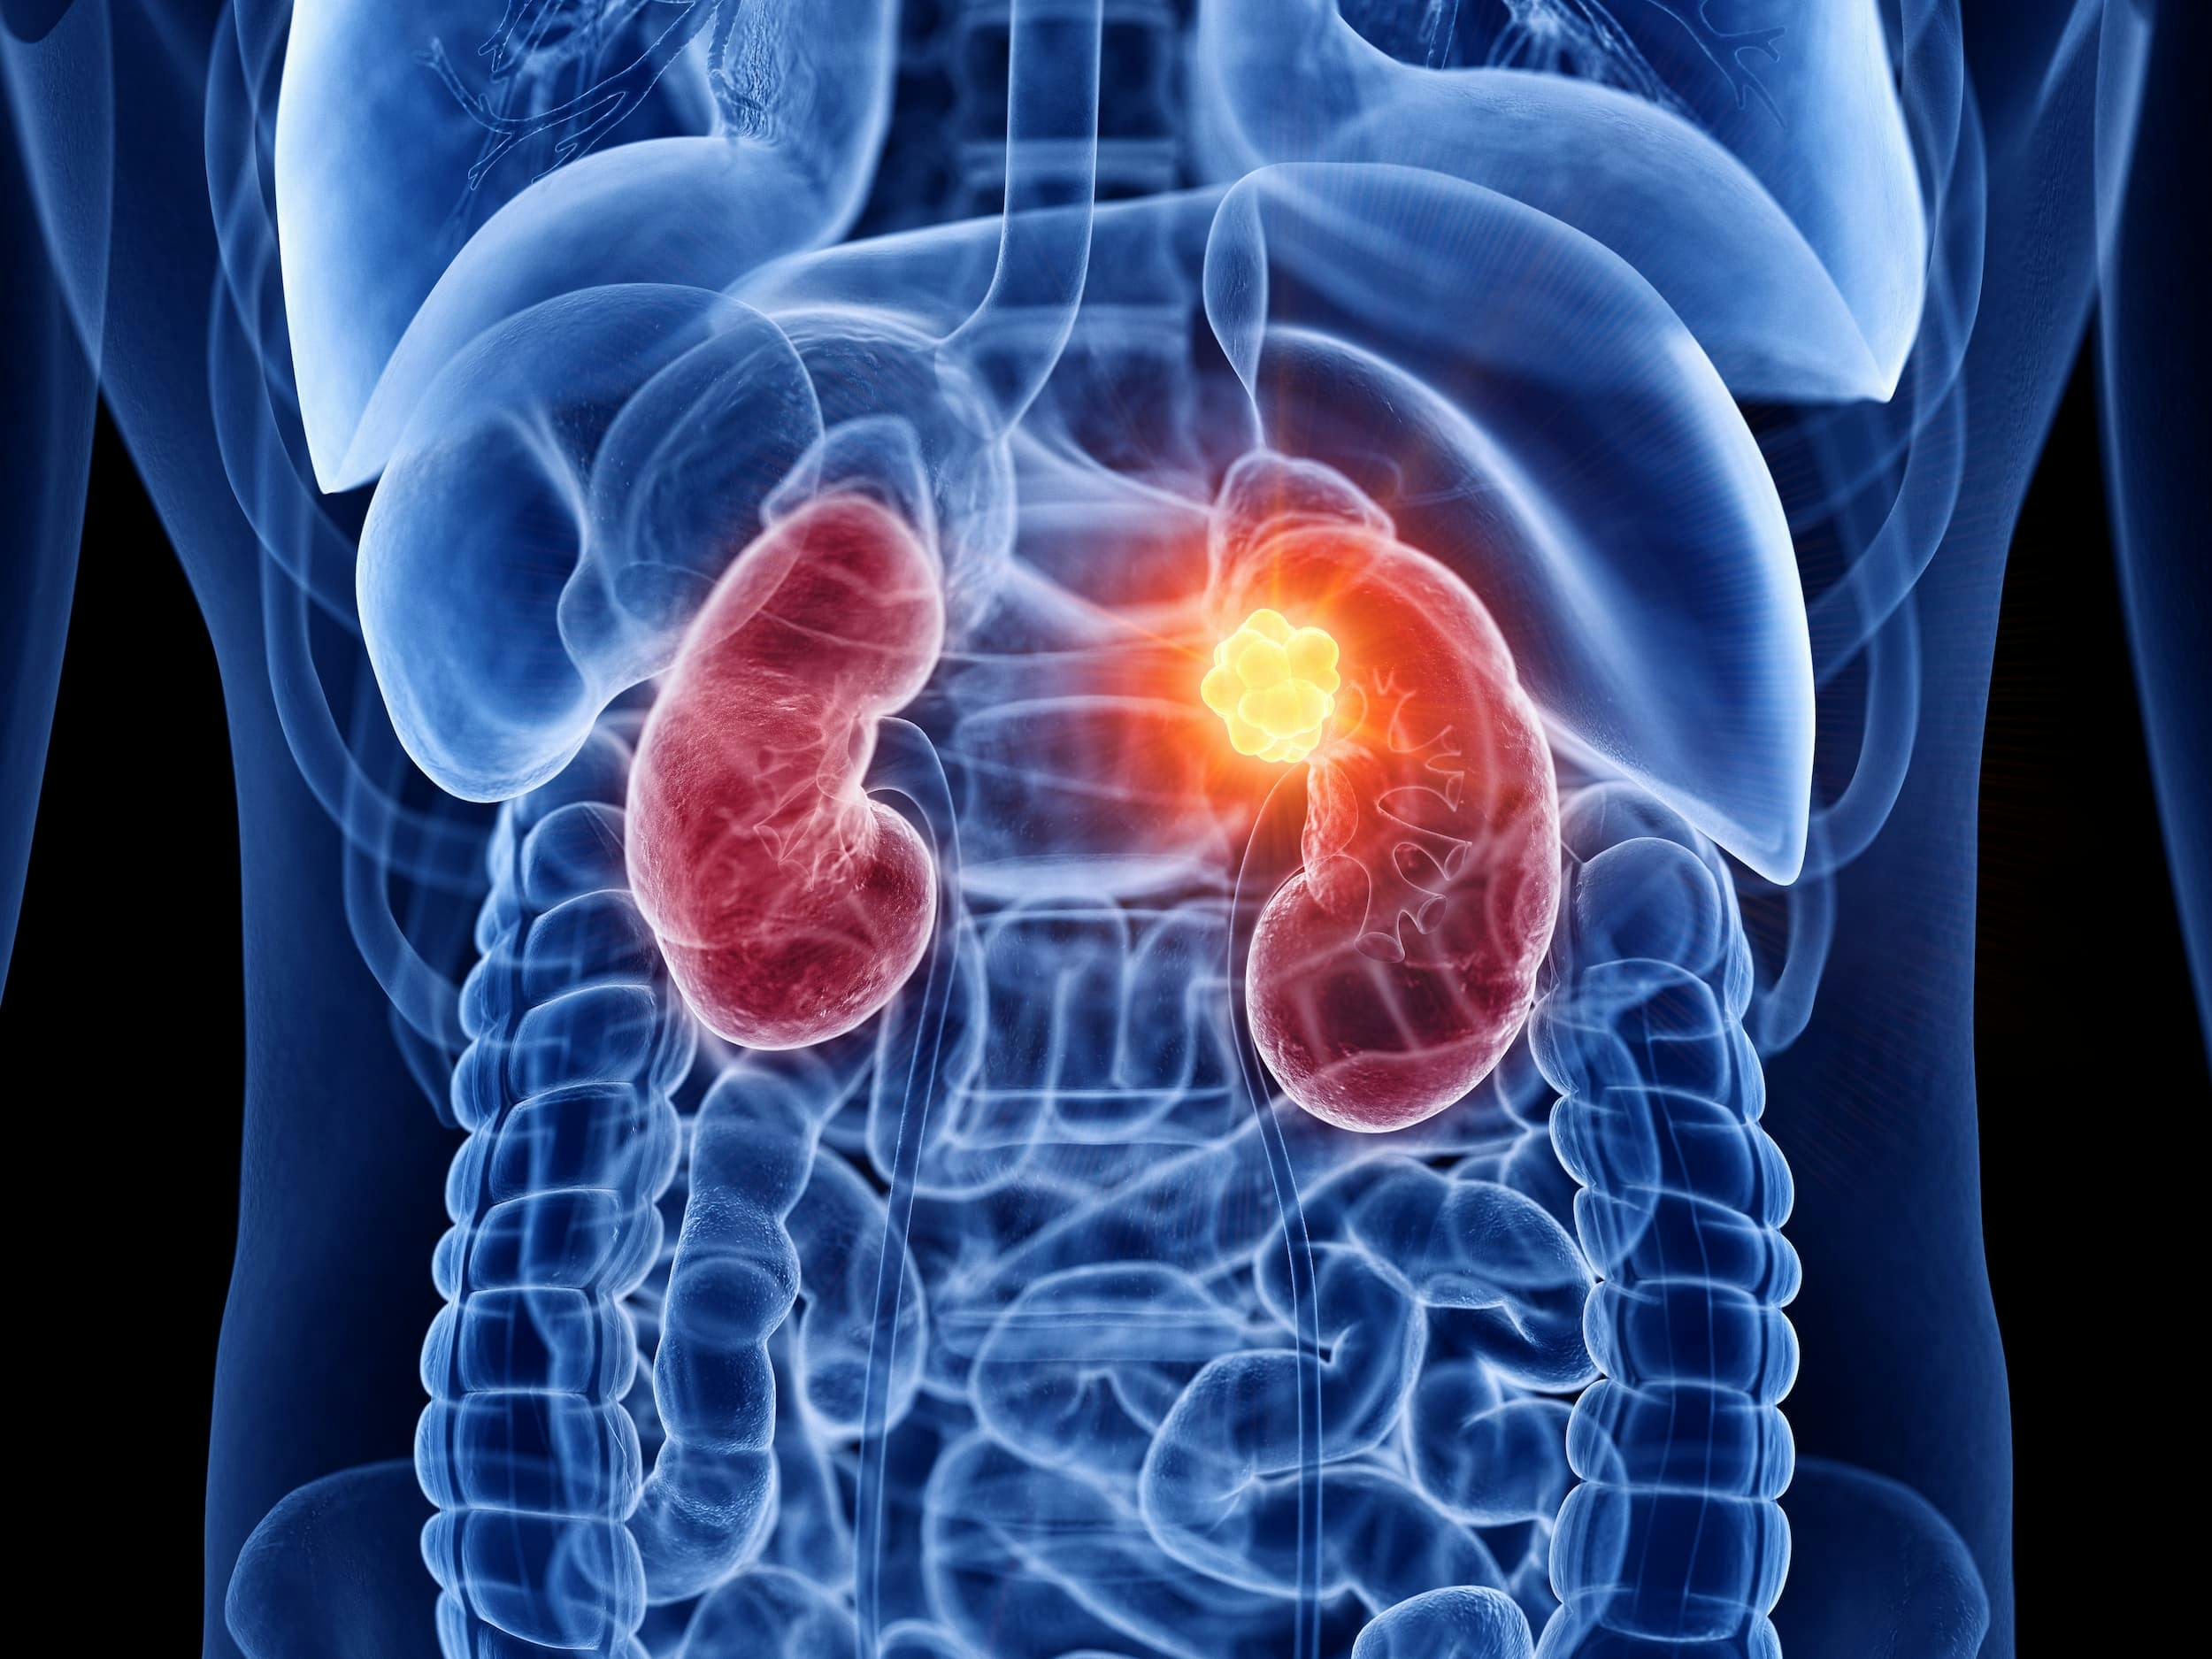 kidney cancer Image credit: © SciePro via Adobe Stock